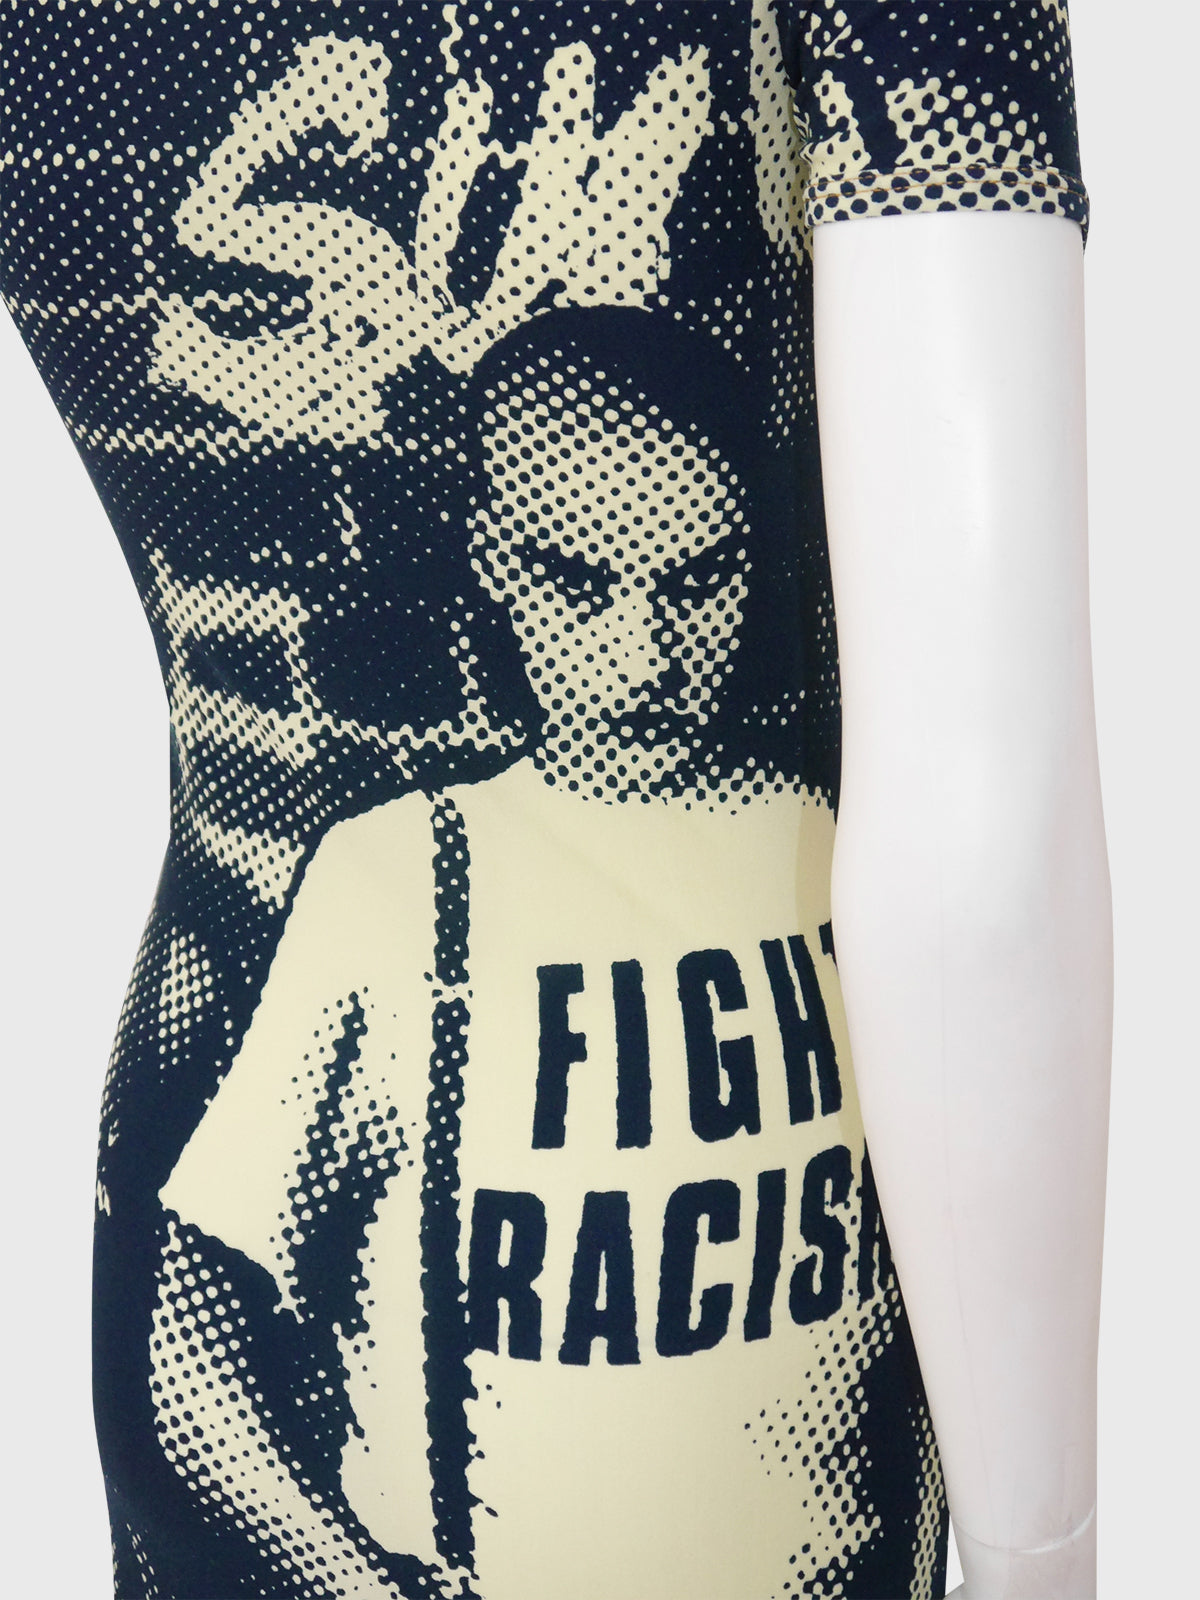 JEAN PAUL GAULTIER Fall 1997 Vintage "Fight Racism" Print Maxi Dress